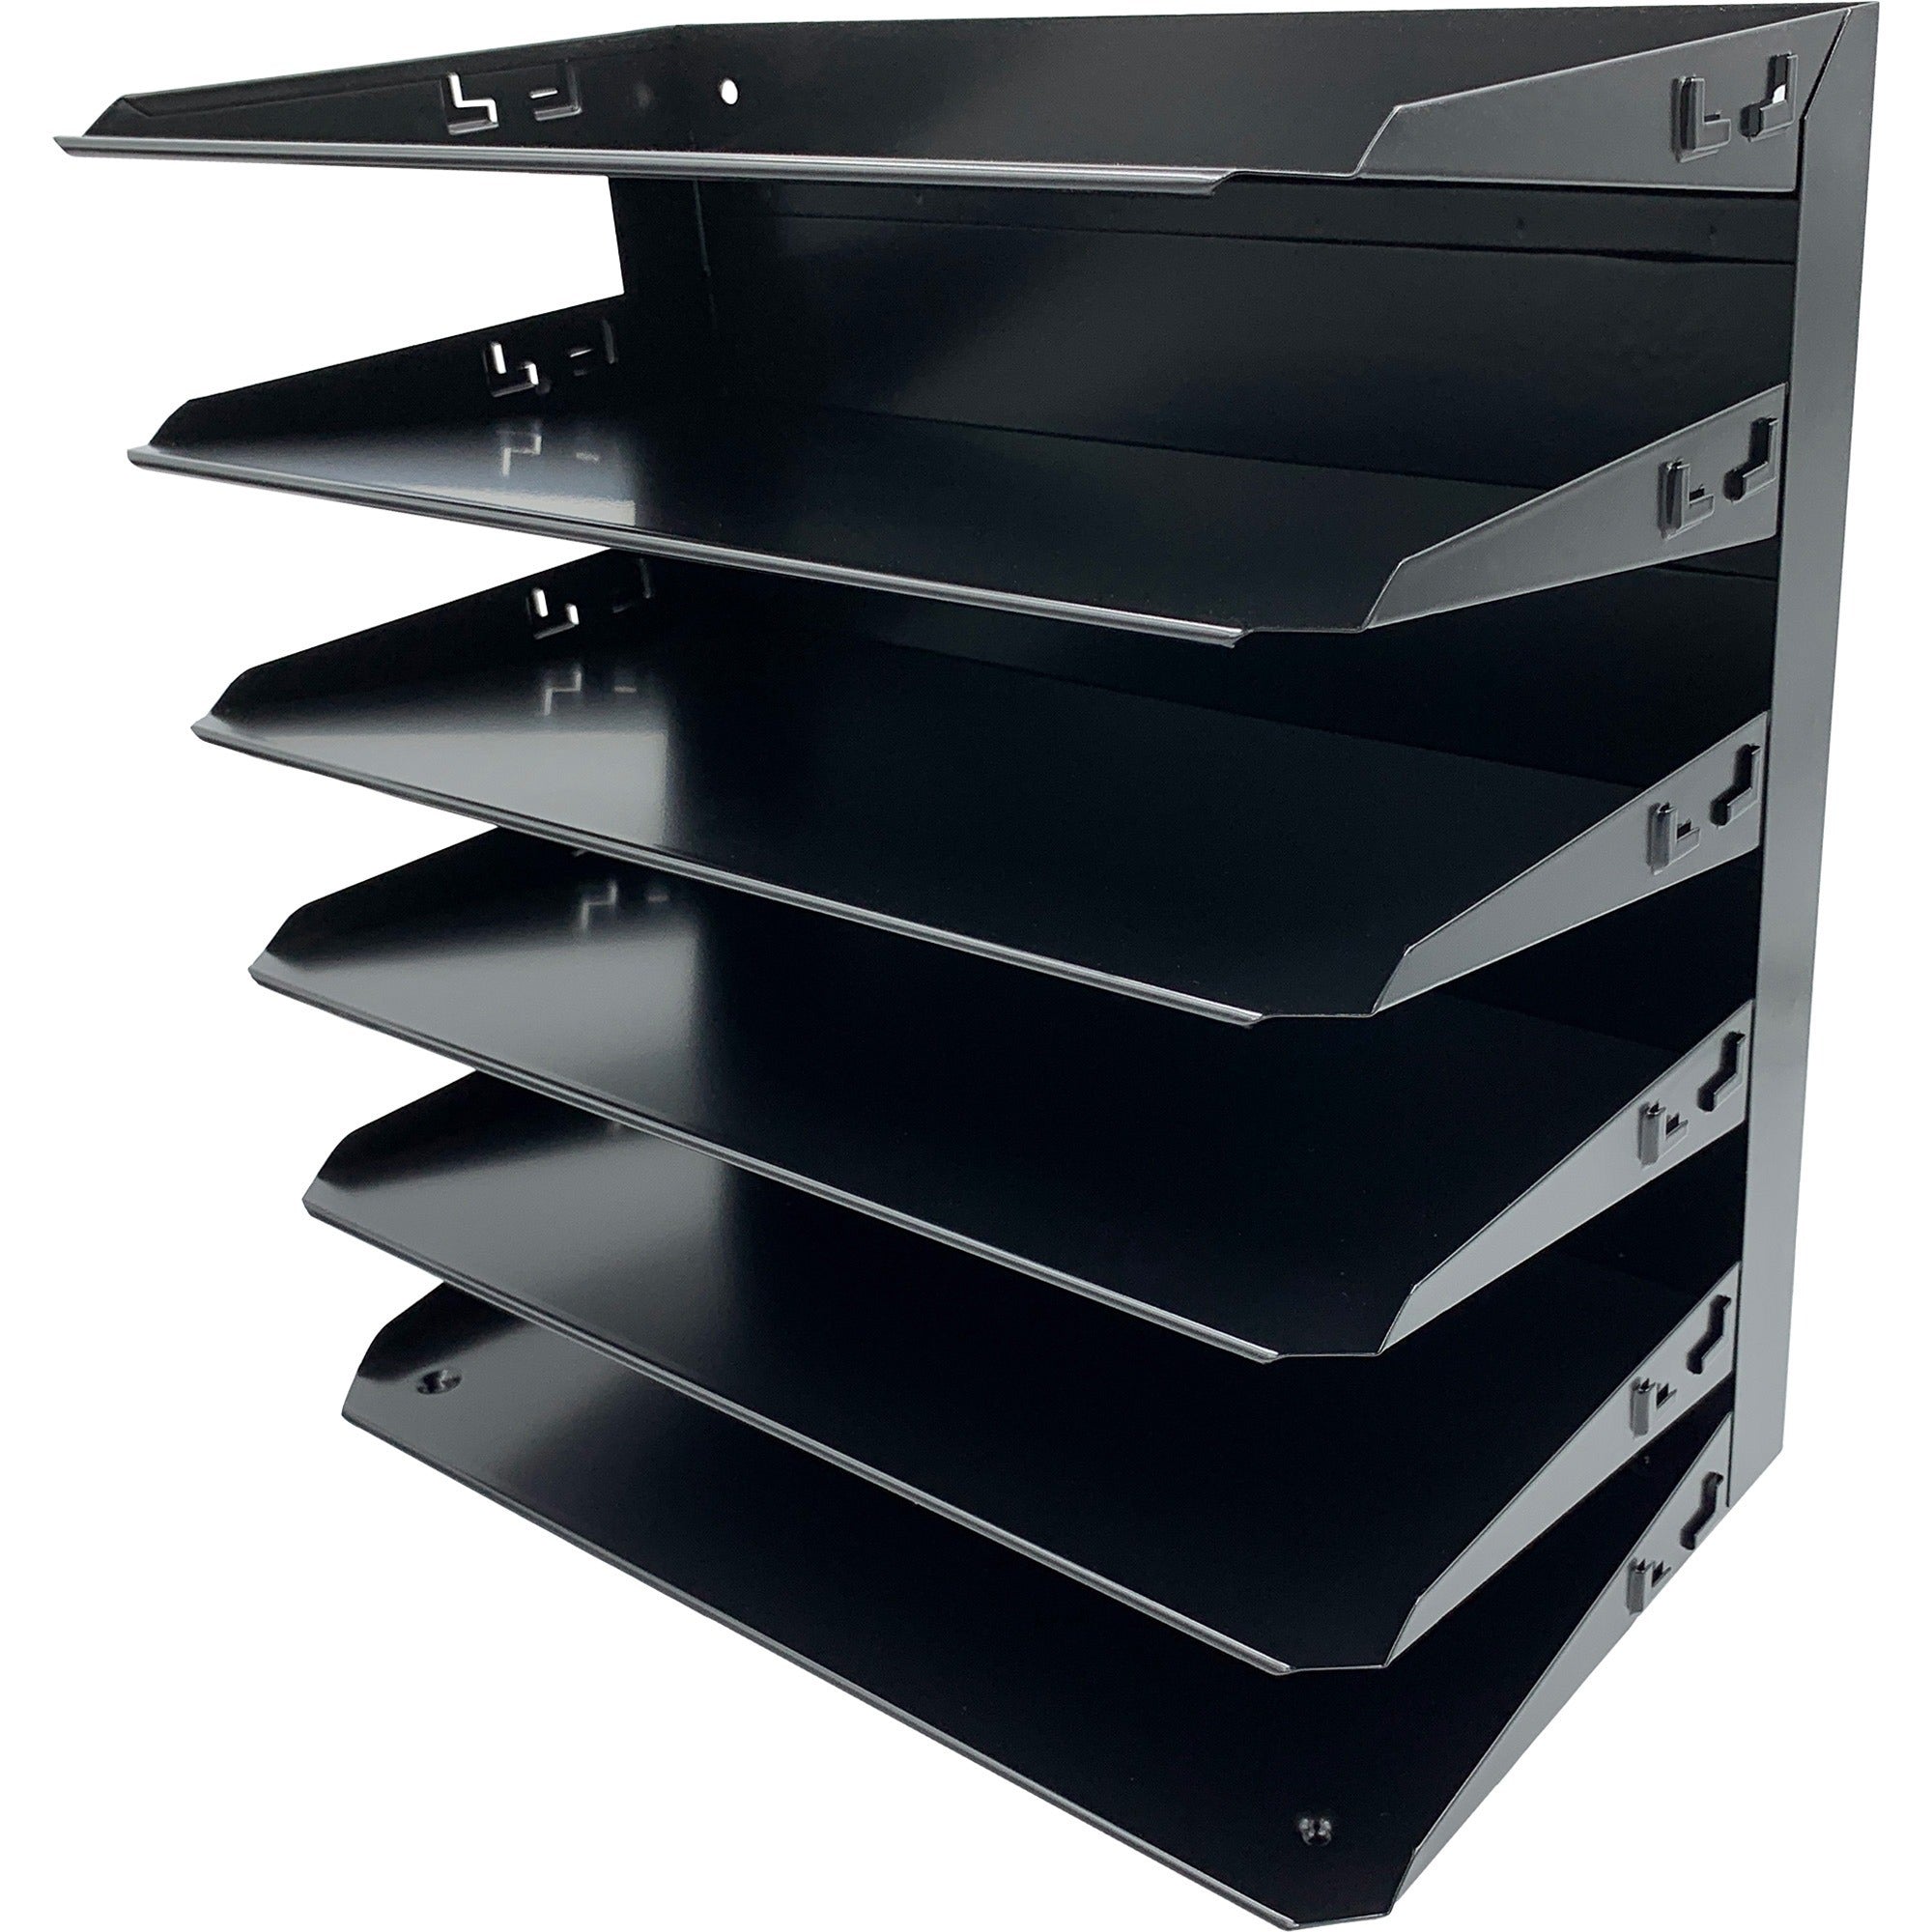 huron-horizontal-slots-desk-organizer-6-compartments-horizontal-15-height-x-15-width-x-87-depth-durable-label-holder-black-steel-1-each_hurhasz0153 - 1